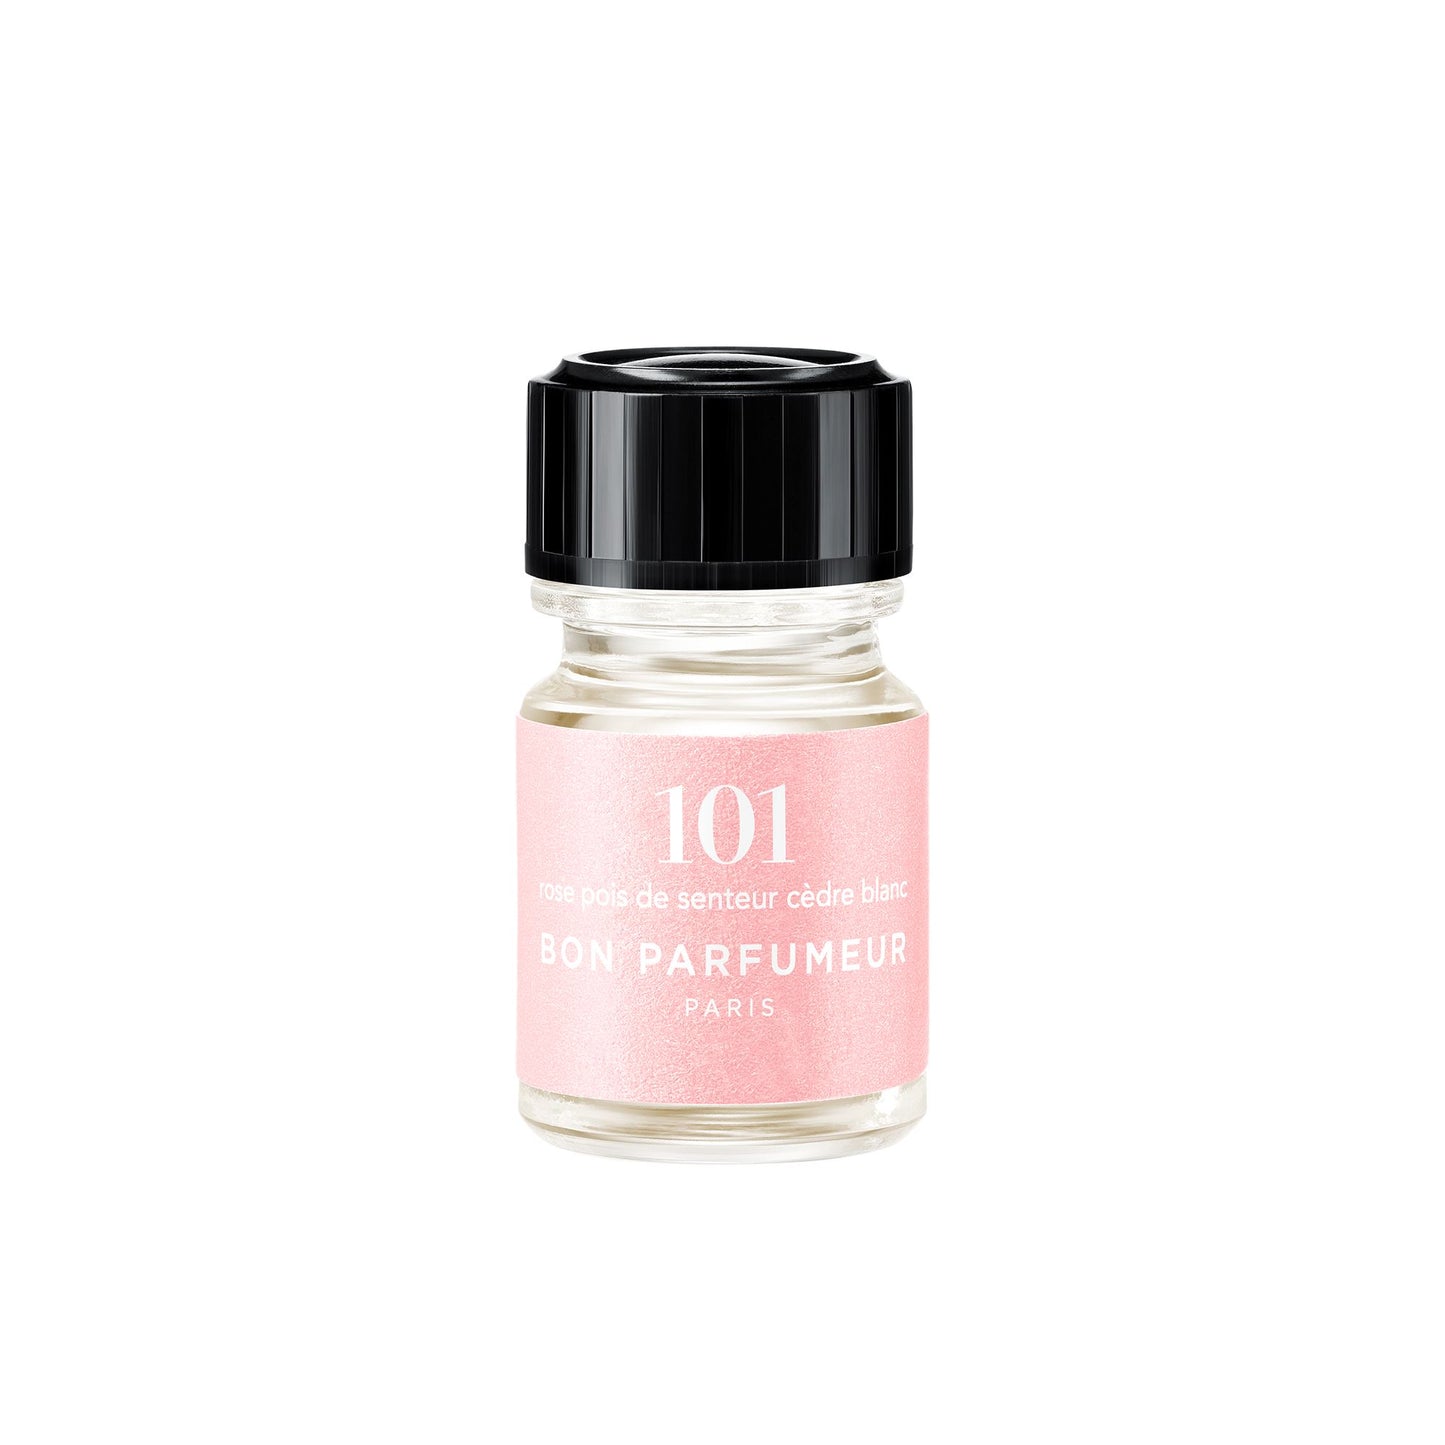 Minishot 101 TEST Bon Parfumeur 101: rose, sweet pea, white cedar 